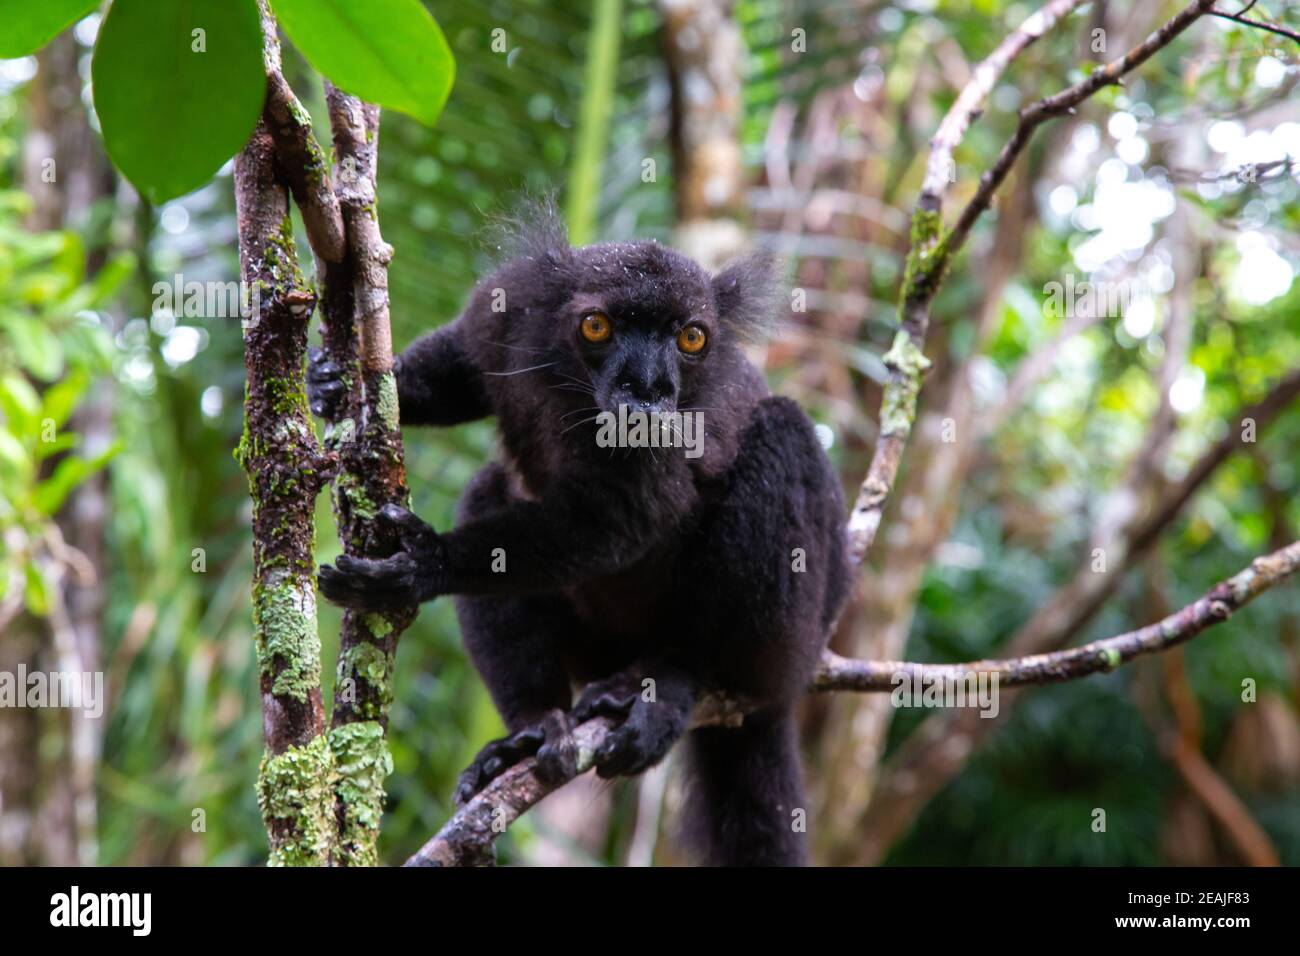 A black lemur on a tree awaiting a banana Stock Photo